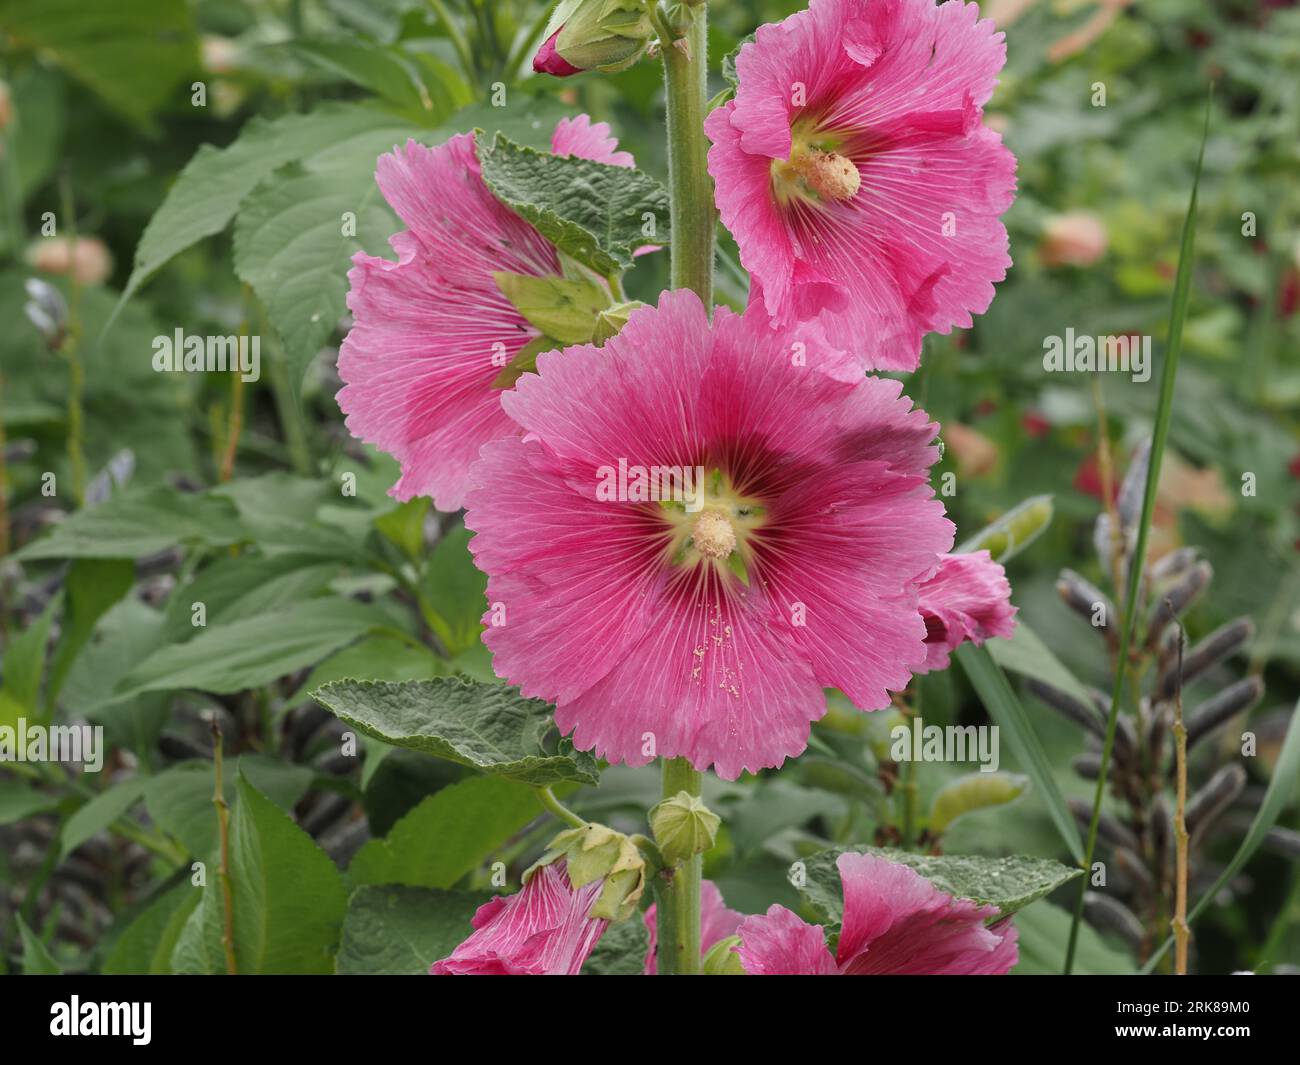 Hollyhock. Scientific name: Alcea rosea. Family: Malvaceae. Order: Malvales. Kingdom: Plantae. Stock Photo